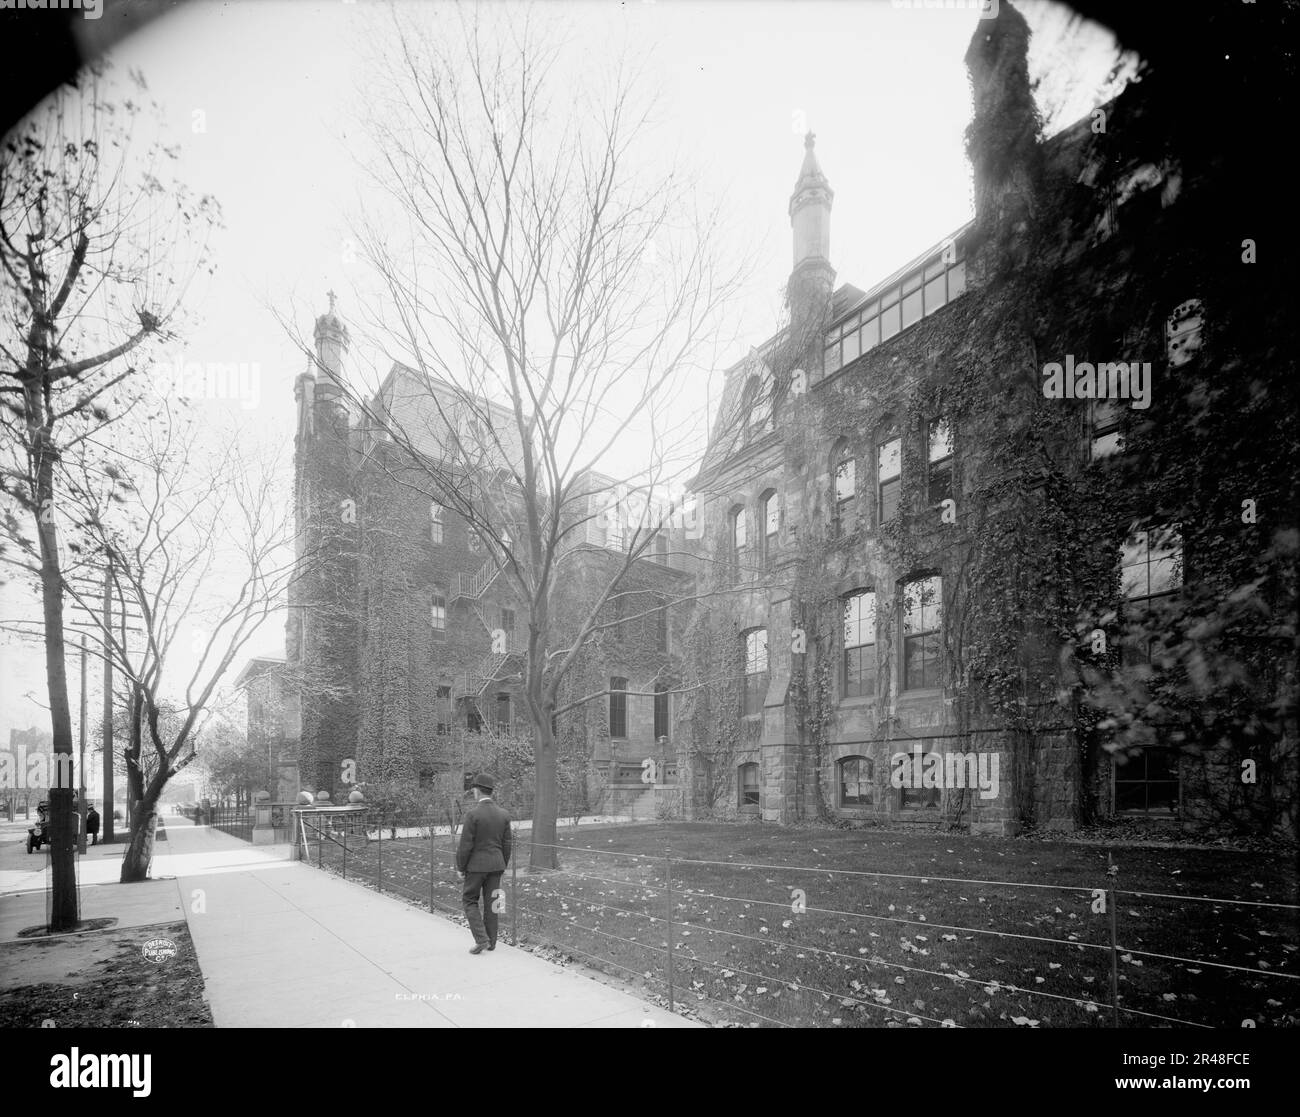 University Hospital, U. of Pa., Philadelphia, Pa., between 1900 and 1910. University of Pennsylvania. Stock Photo